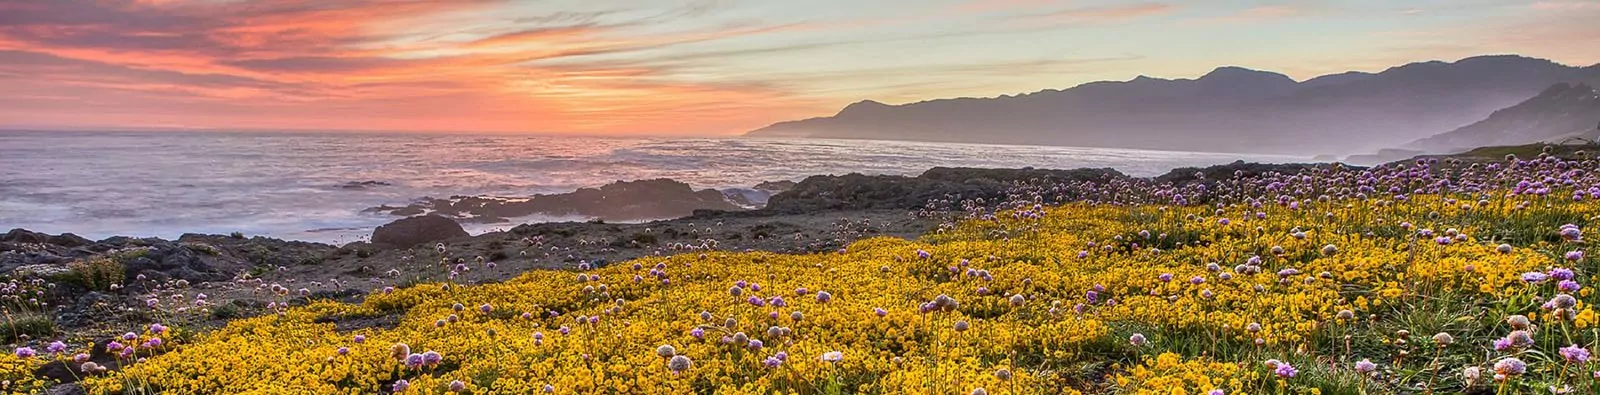 Beautiful wildflowers in the Lost Coast of California